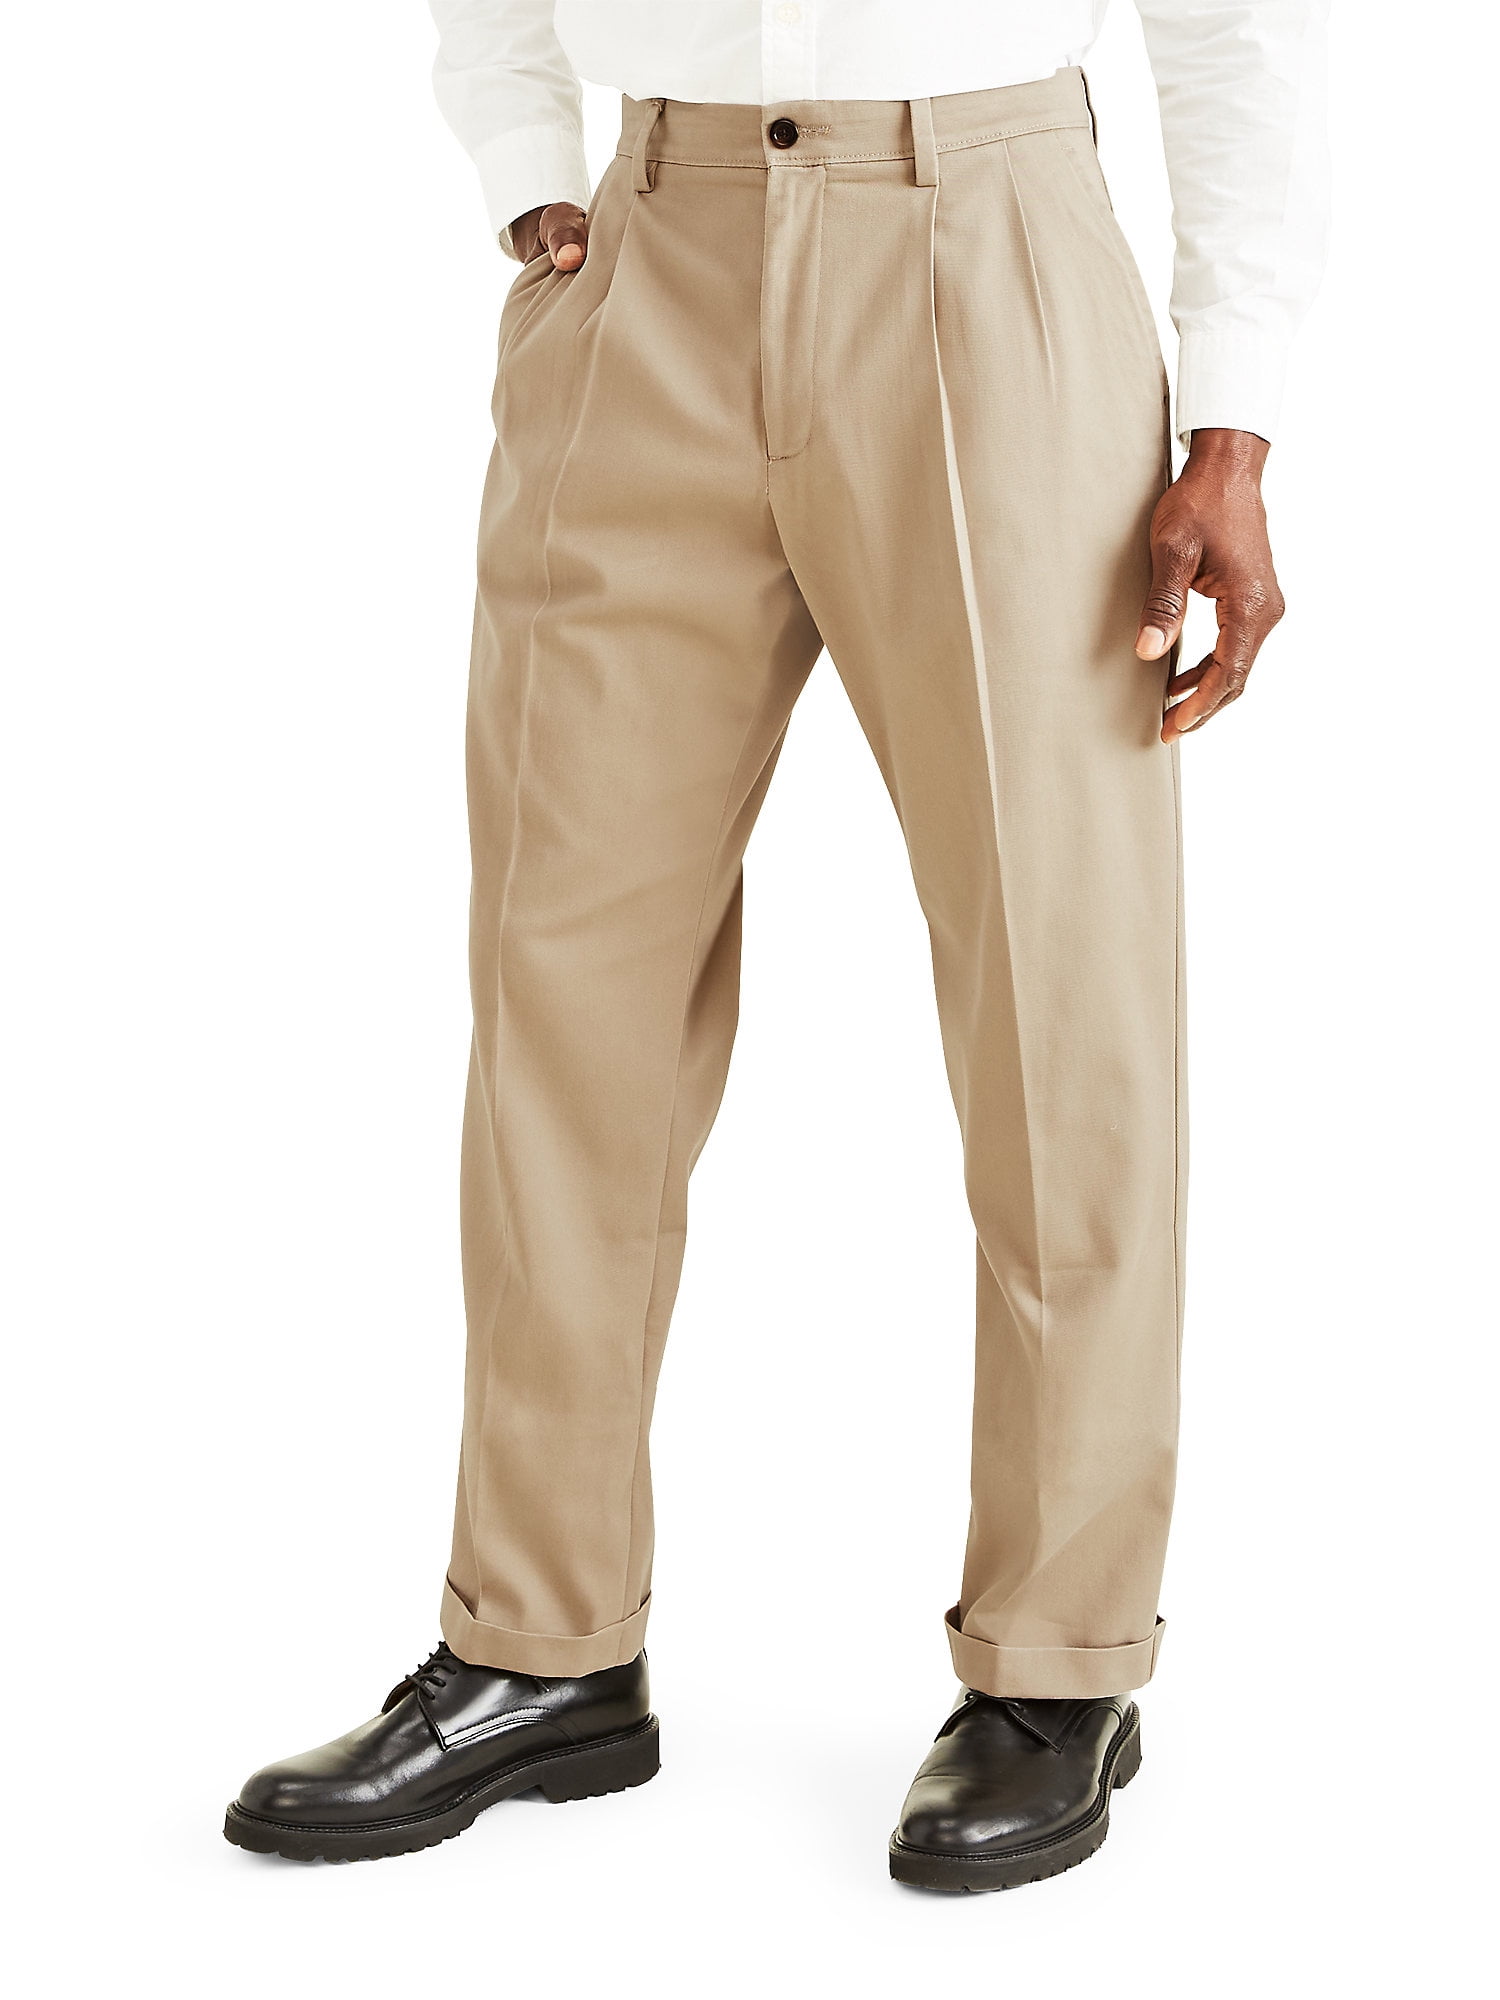 13 Best Dockers pants ideas in 2023  men casual mens outfits dockers  pants